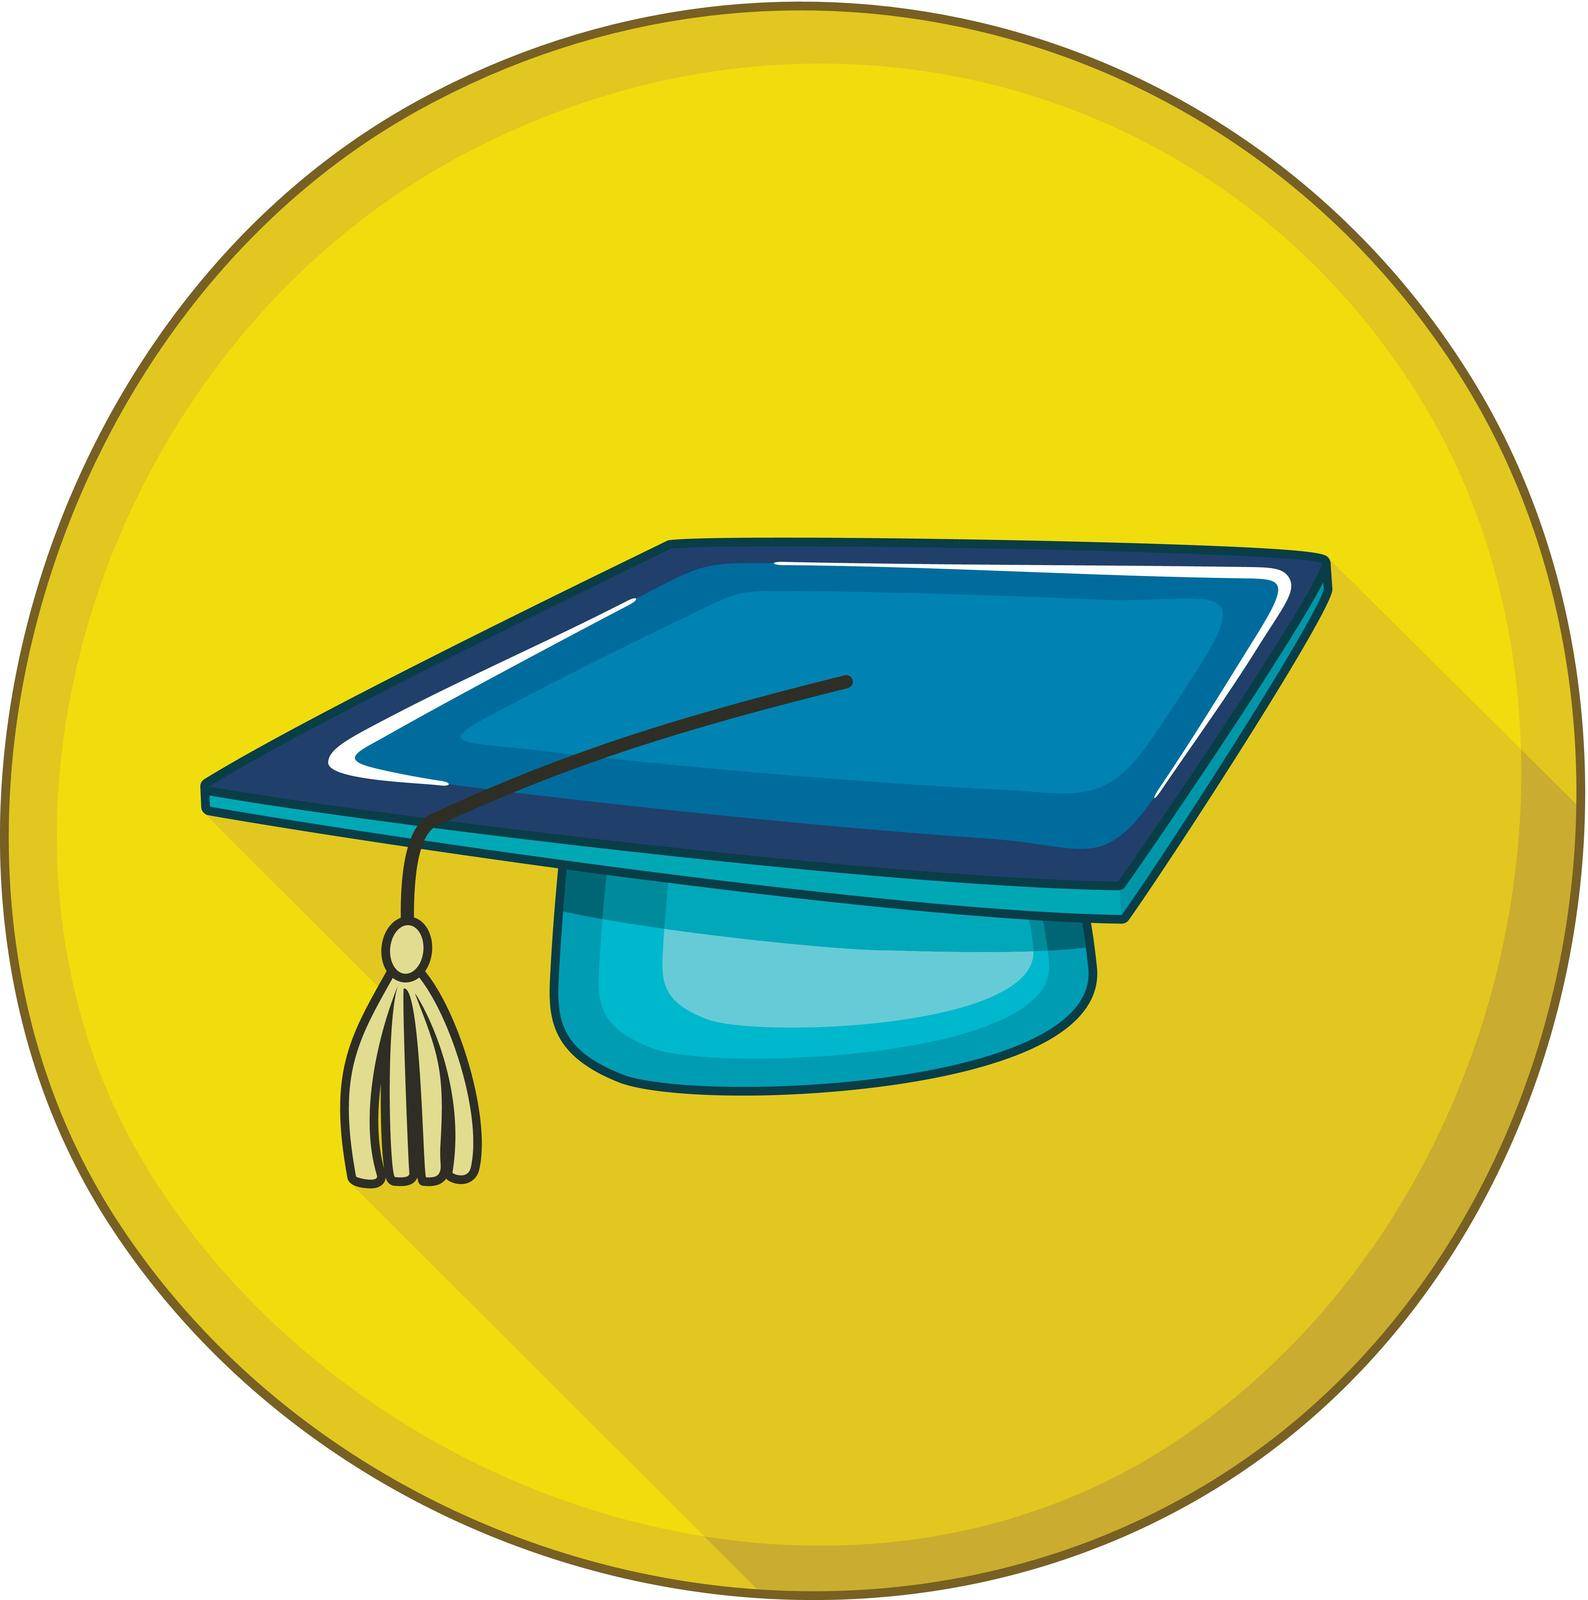 Graduation Cap flat icon, vector illustration eps 10